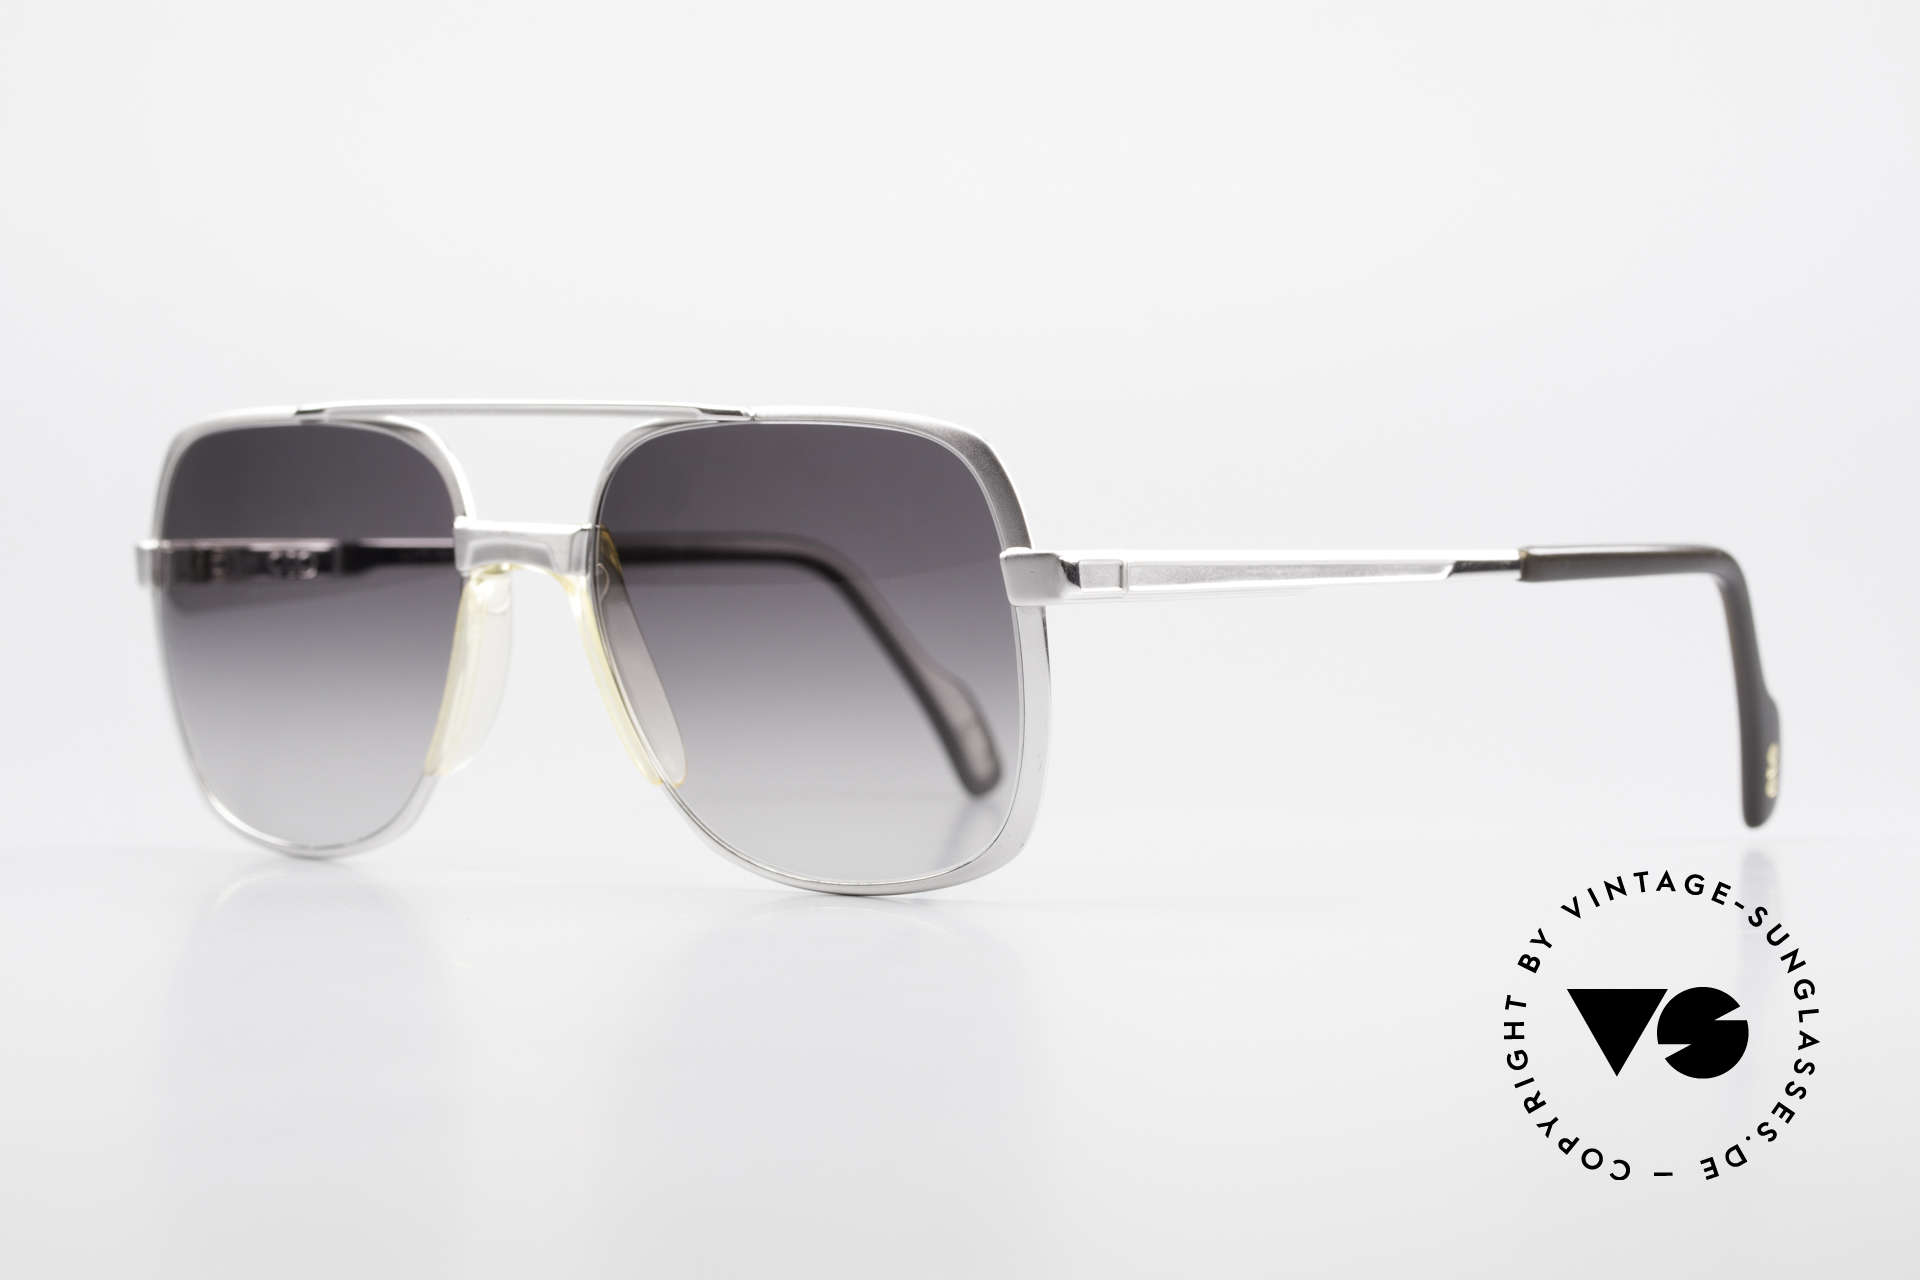 Metzler 0766 1980's Old School Sunglasses, the former chancellor Helmut Kohl wore this model, Made for Men